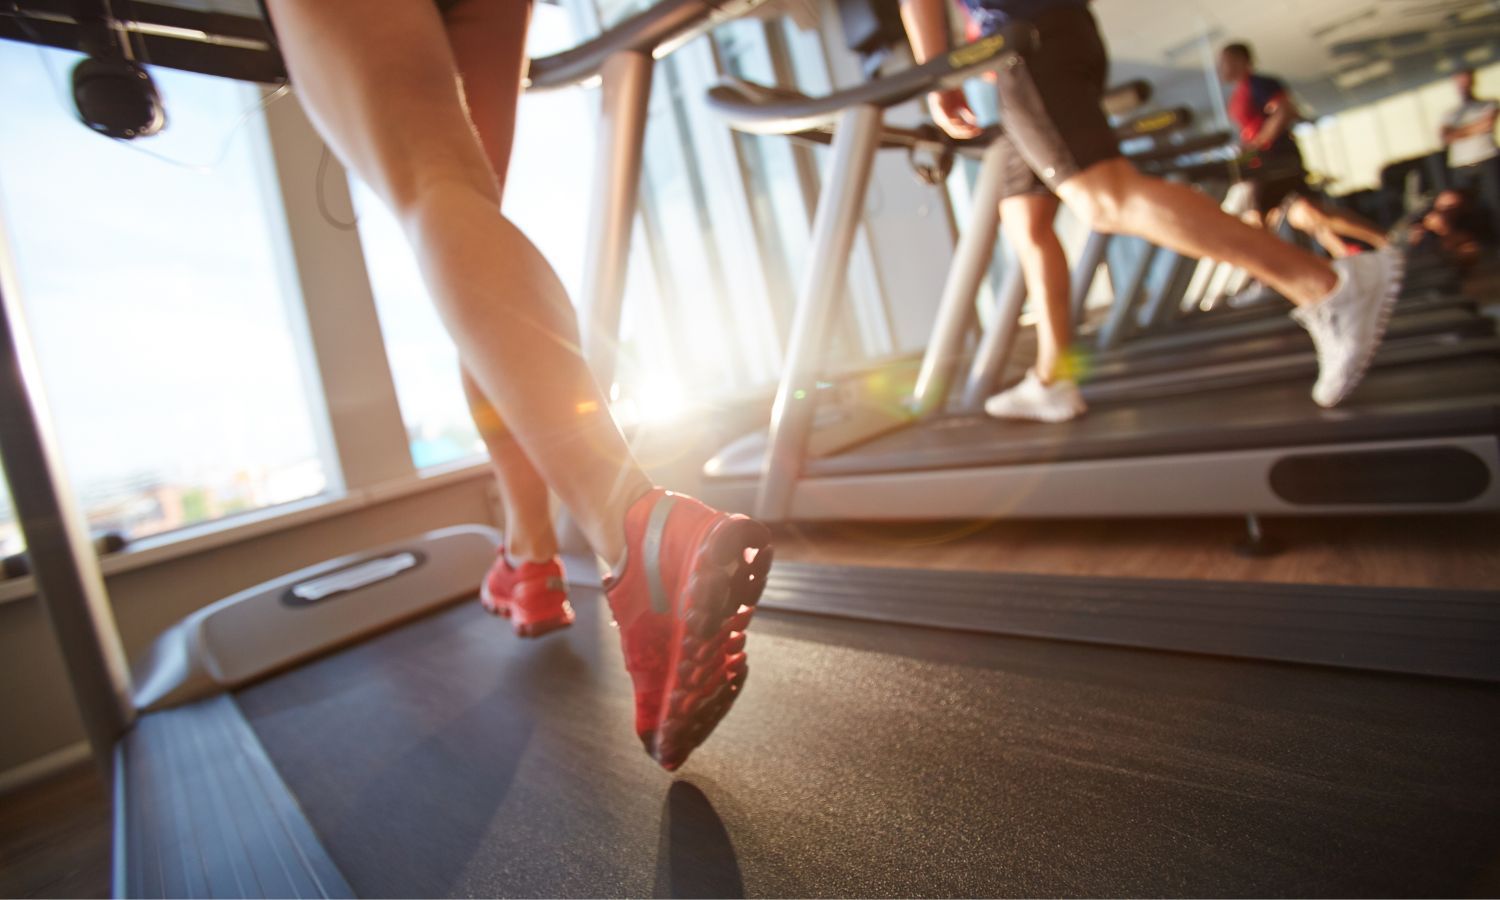 Treadmill - Effective Gym Equipment